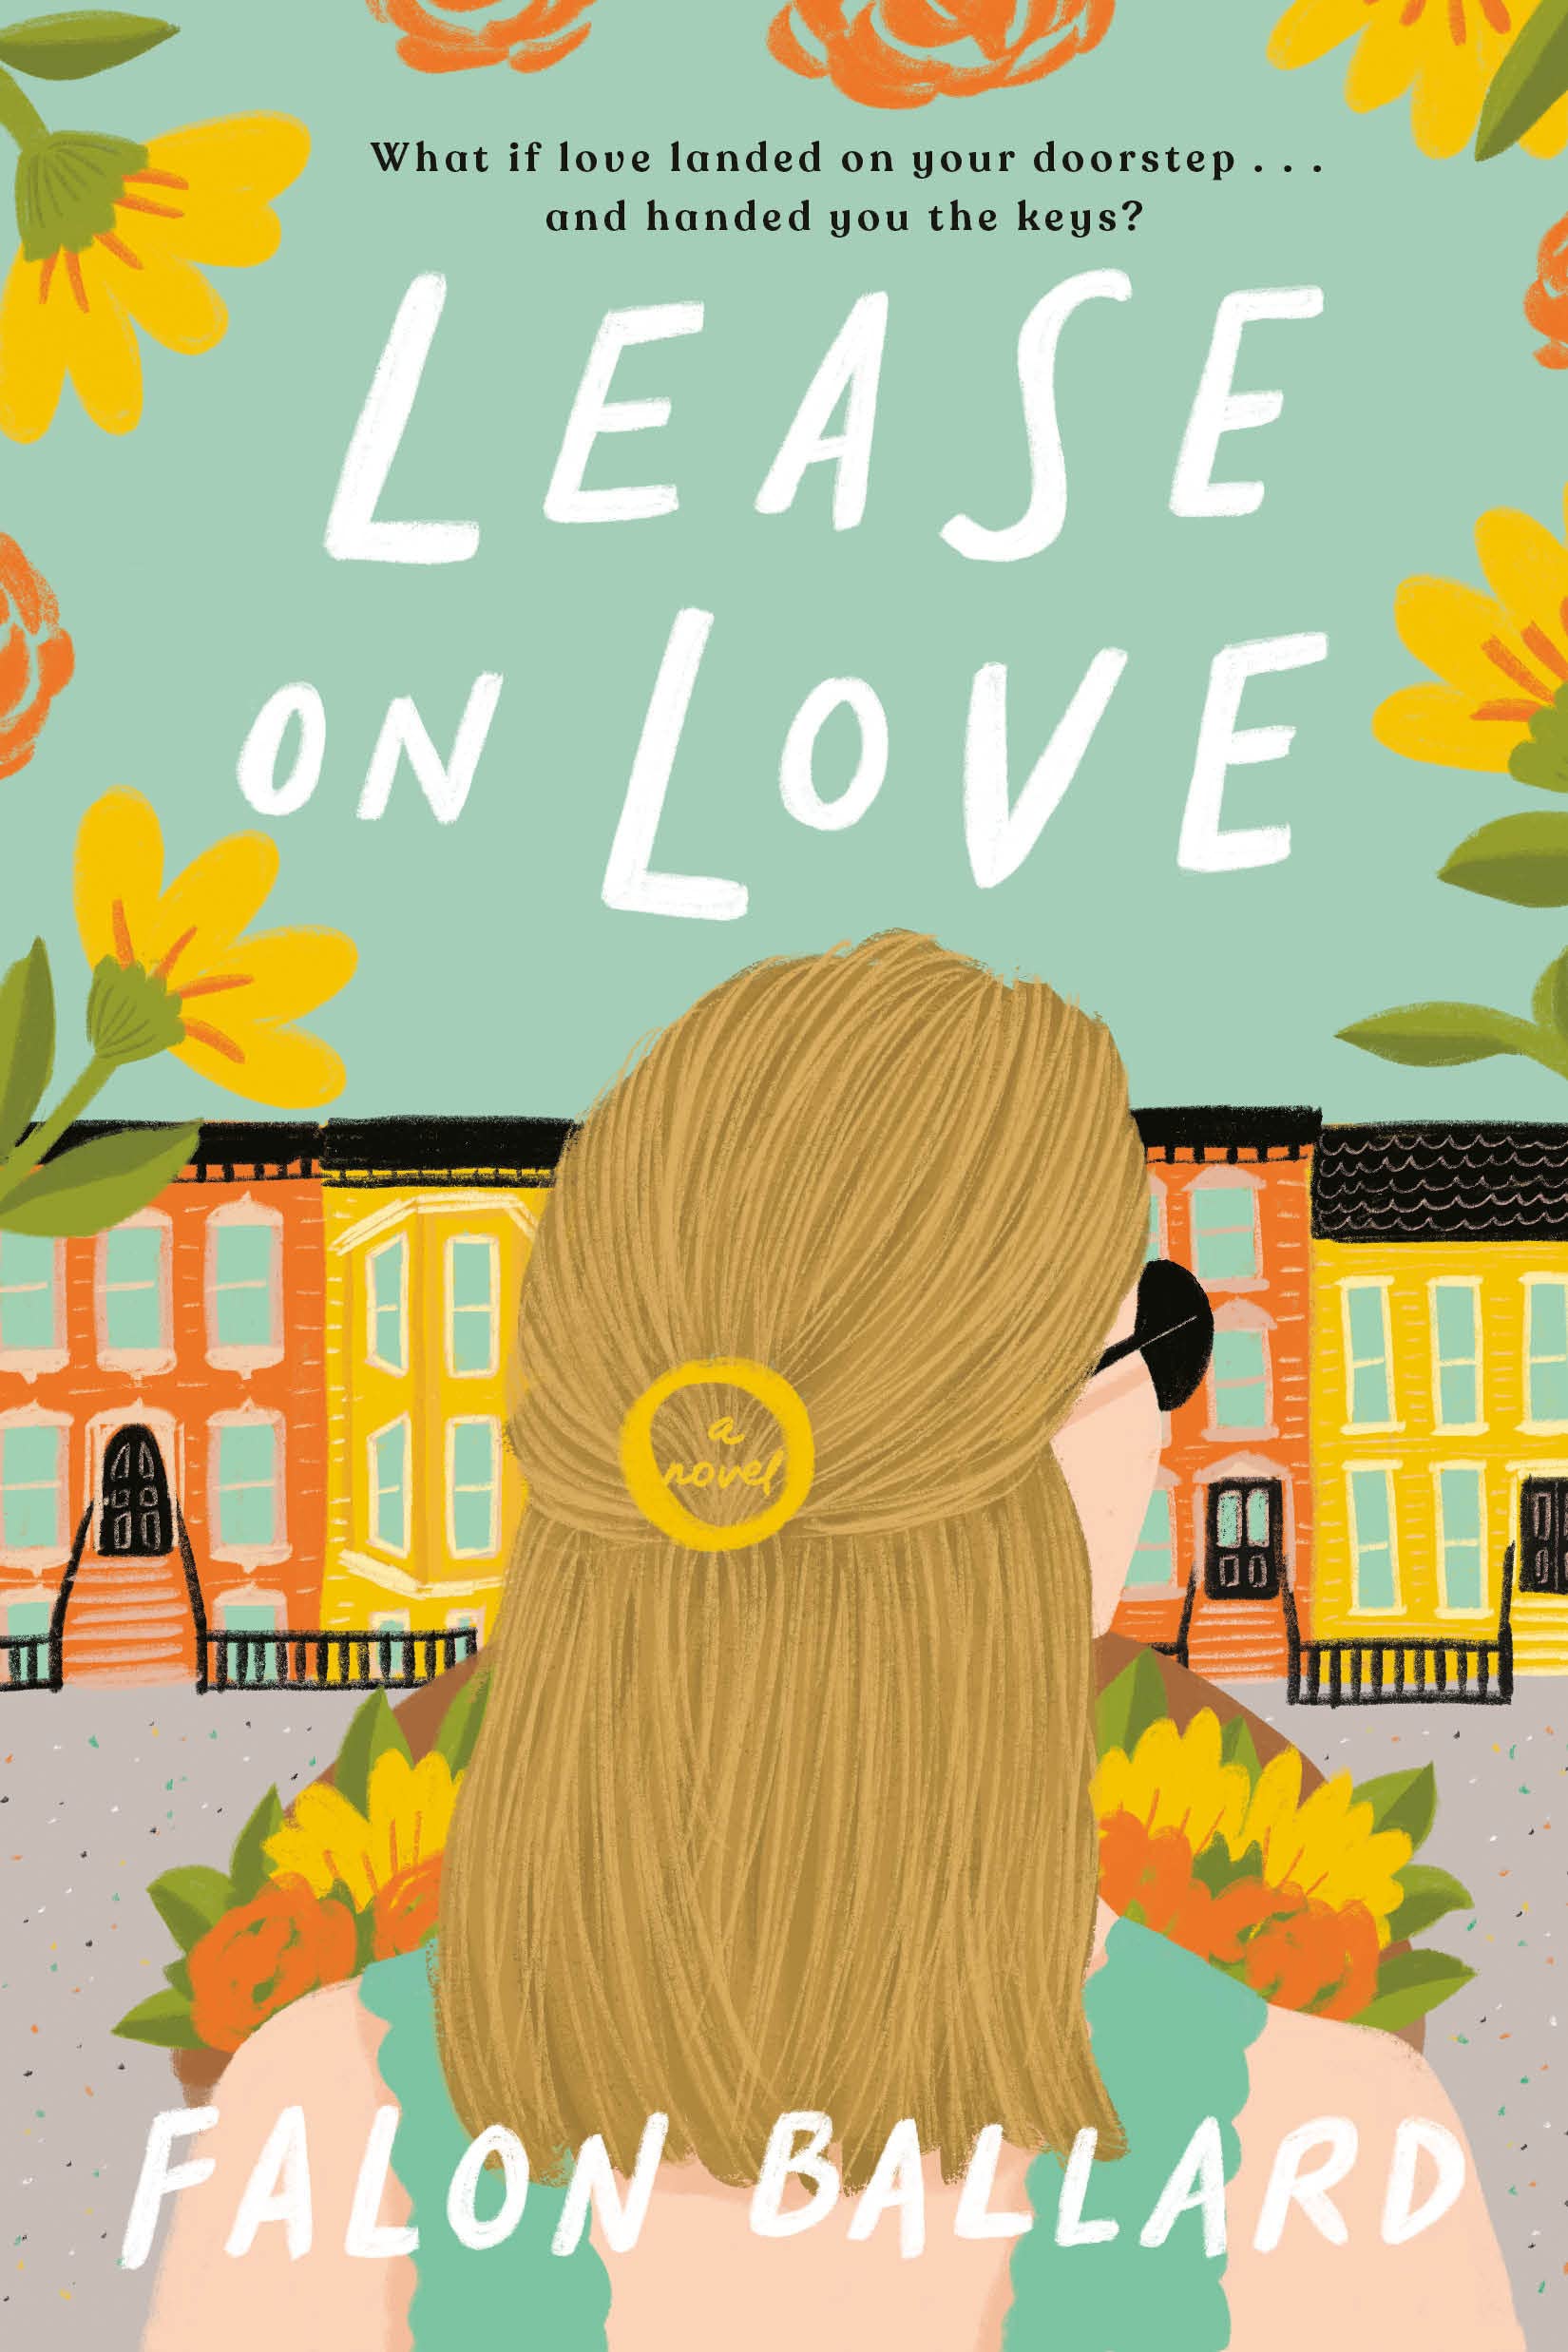 Lease on Love | Falon Ballard image5